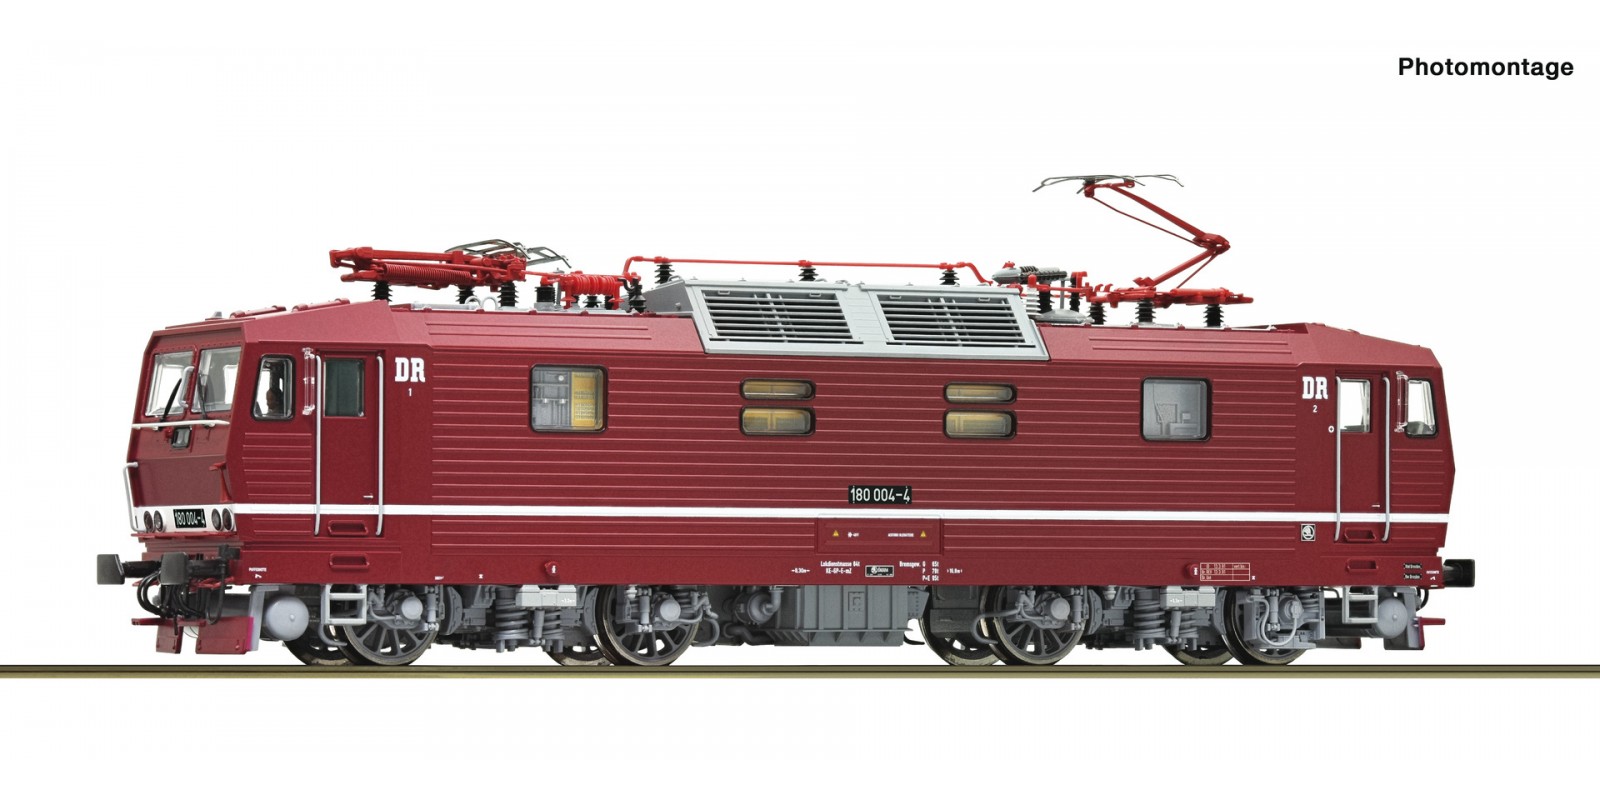 RO7520052 Electric locomotive 180 0 04-4, DR                 